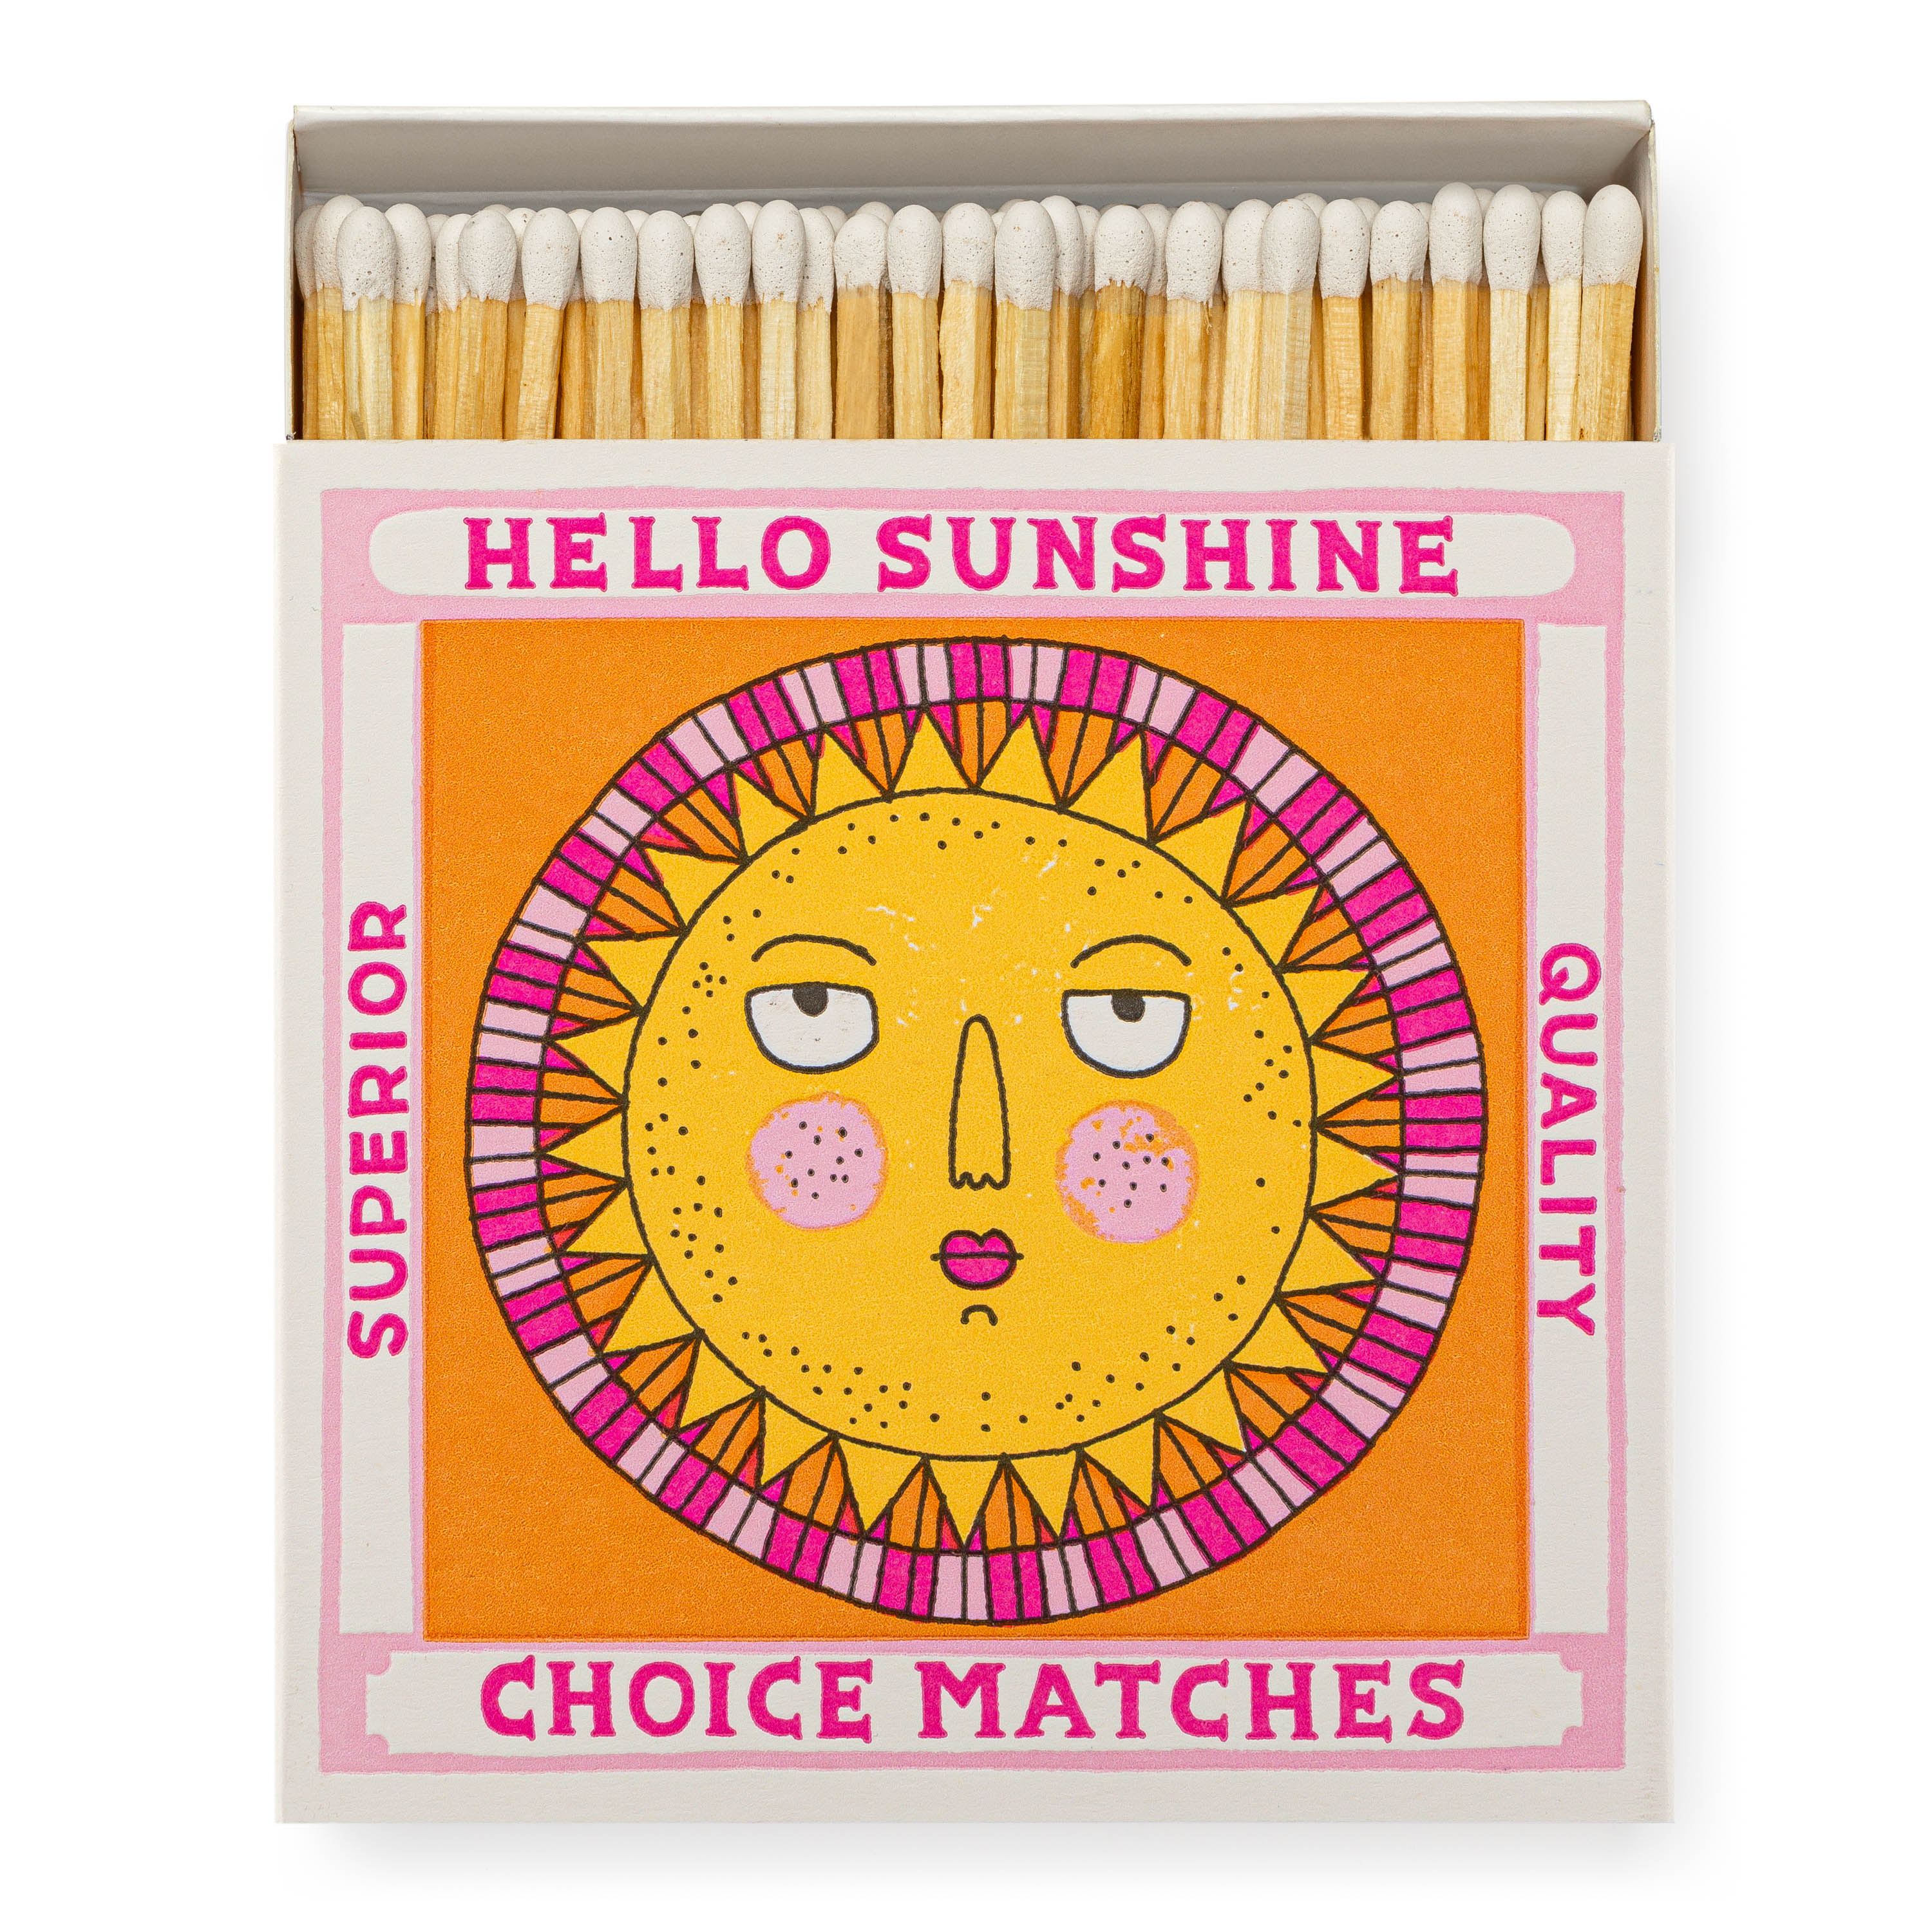 Hello Sunshine - Square Matchboxes - Charlotte Farmer - from Archivist Gallery 